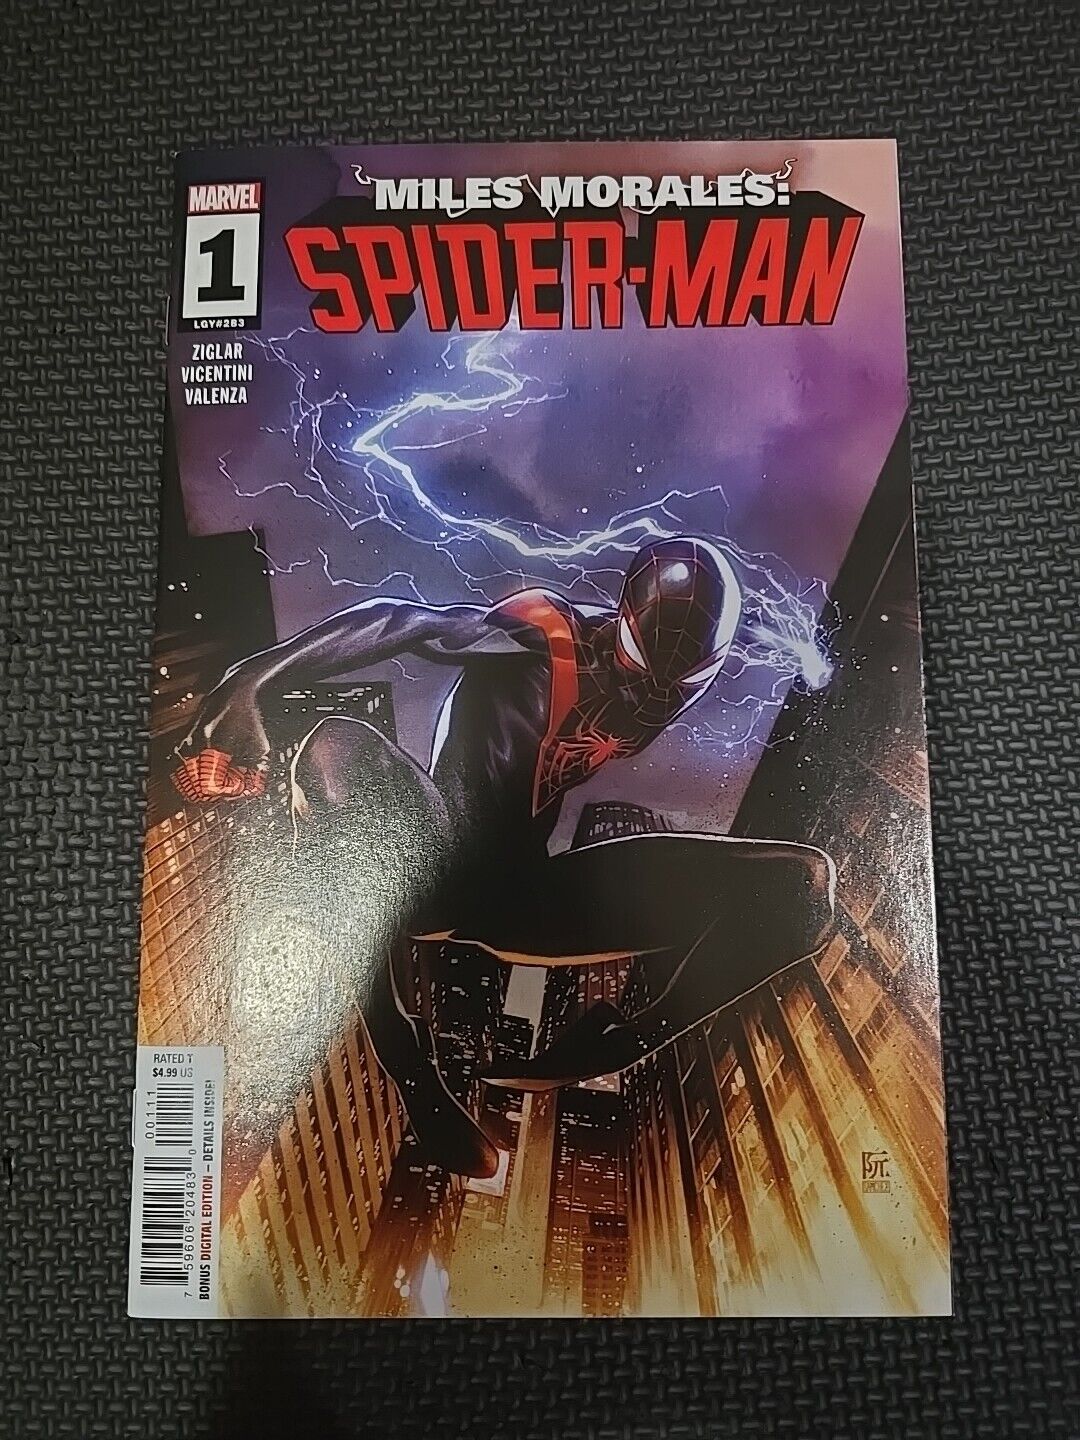 Miles Morales Spider-Man #1 LGY #283 VF/NM